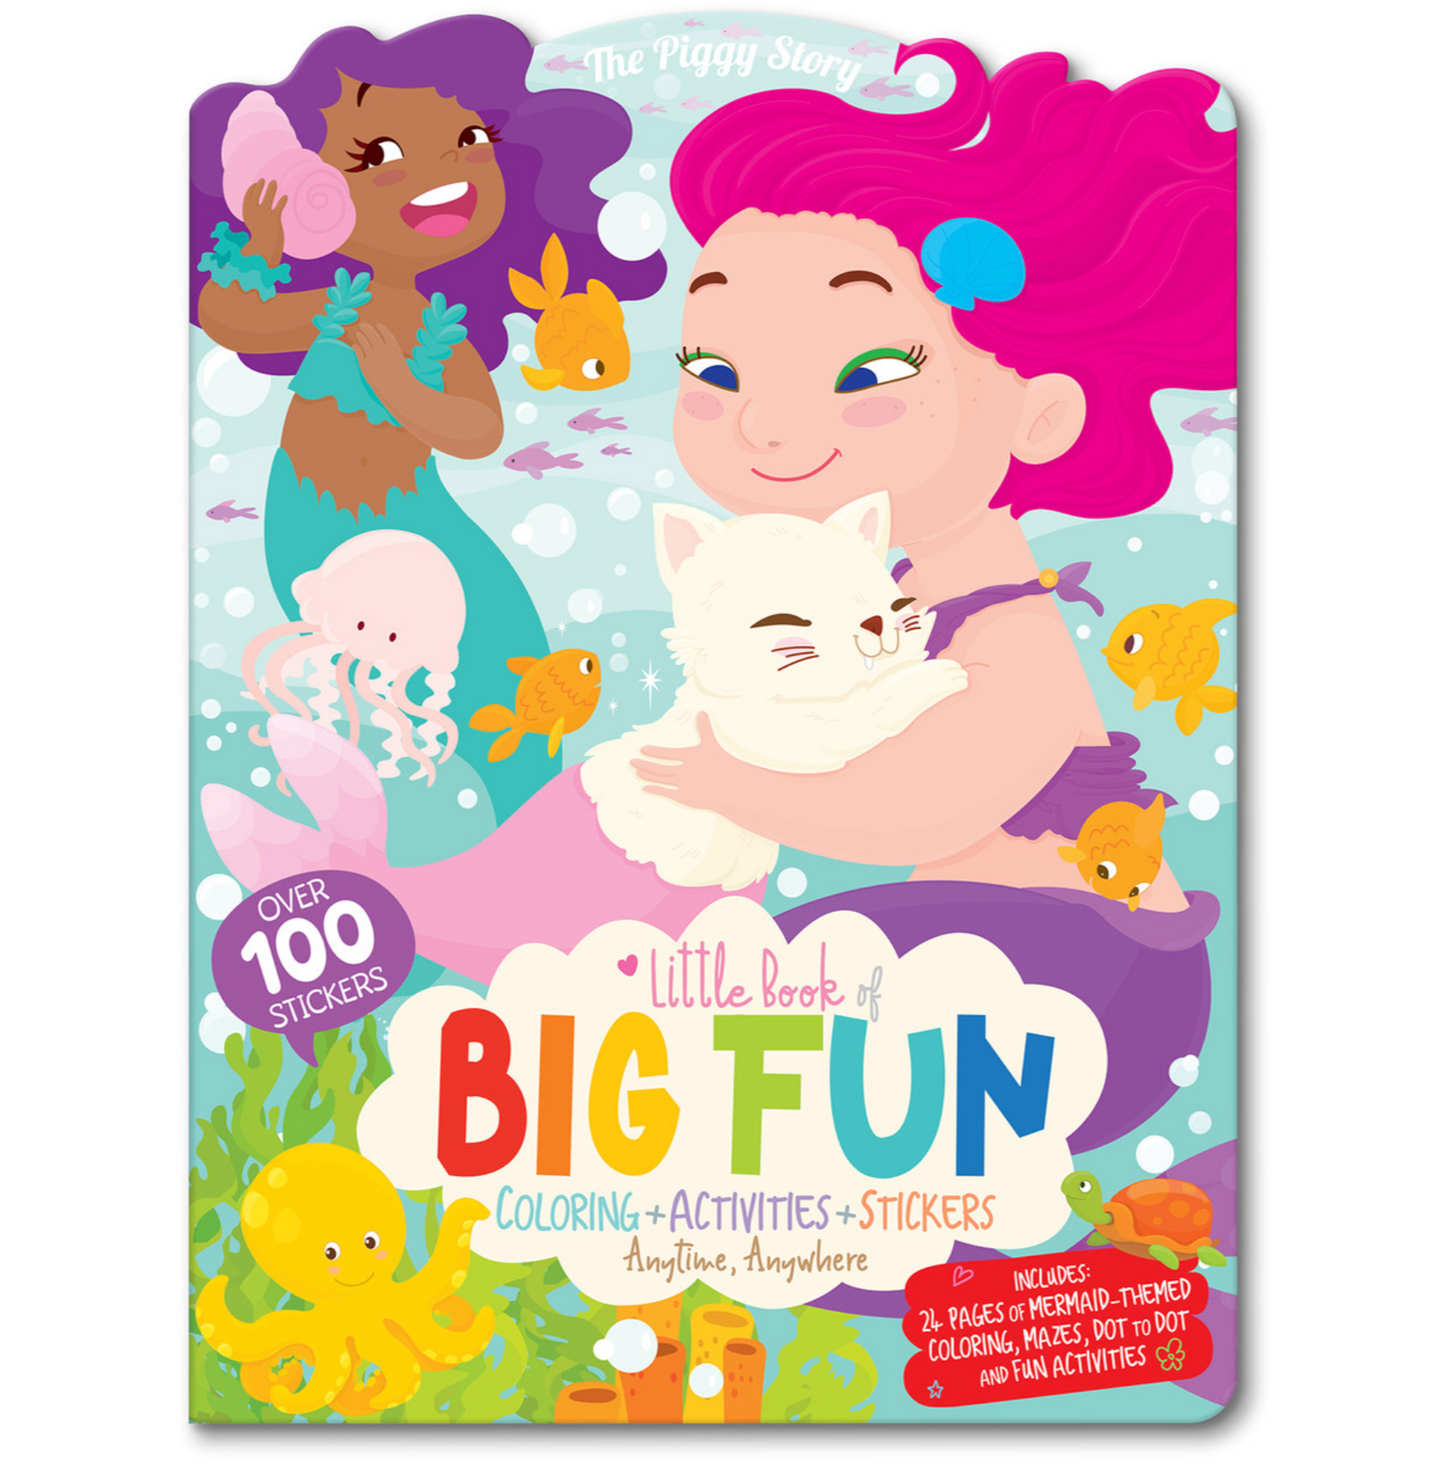 Magical Mermaids - Little Book of Big Fun